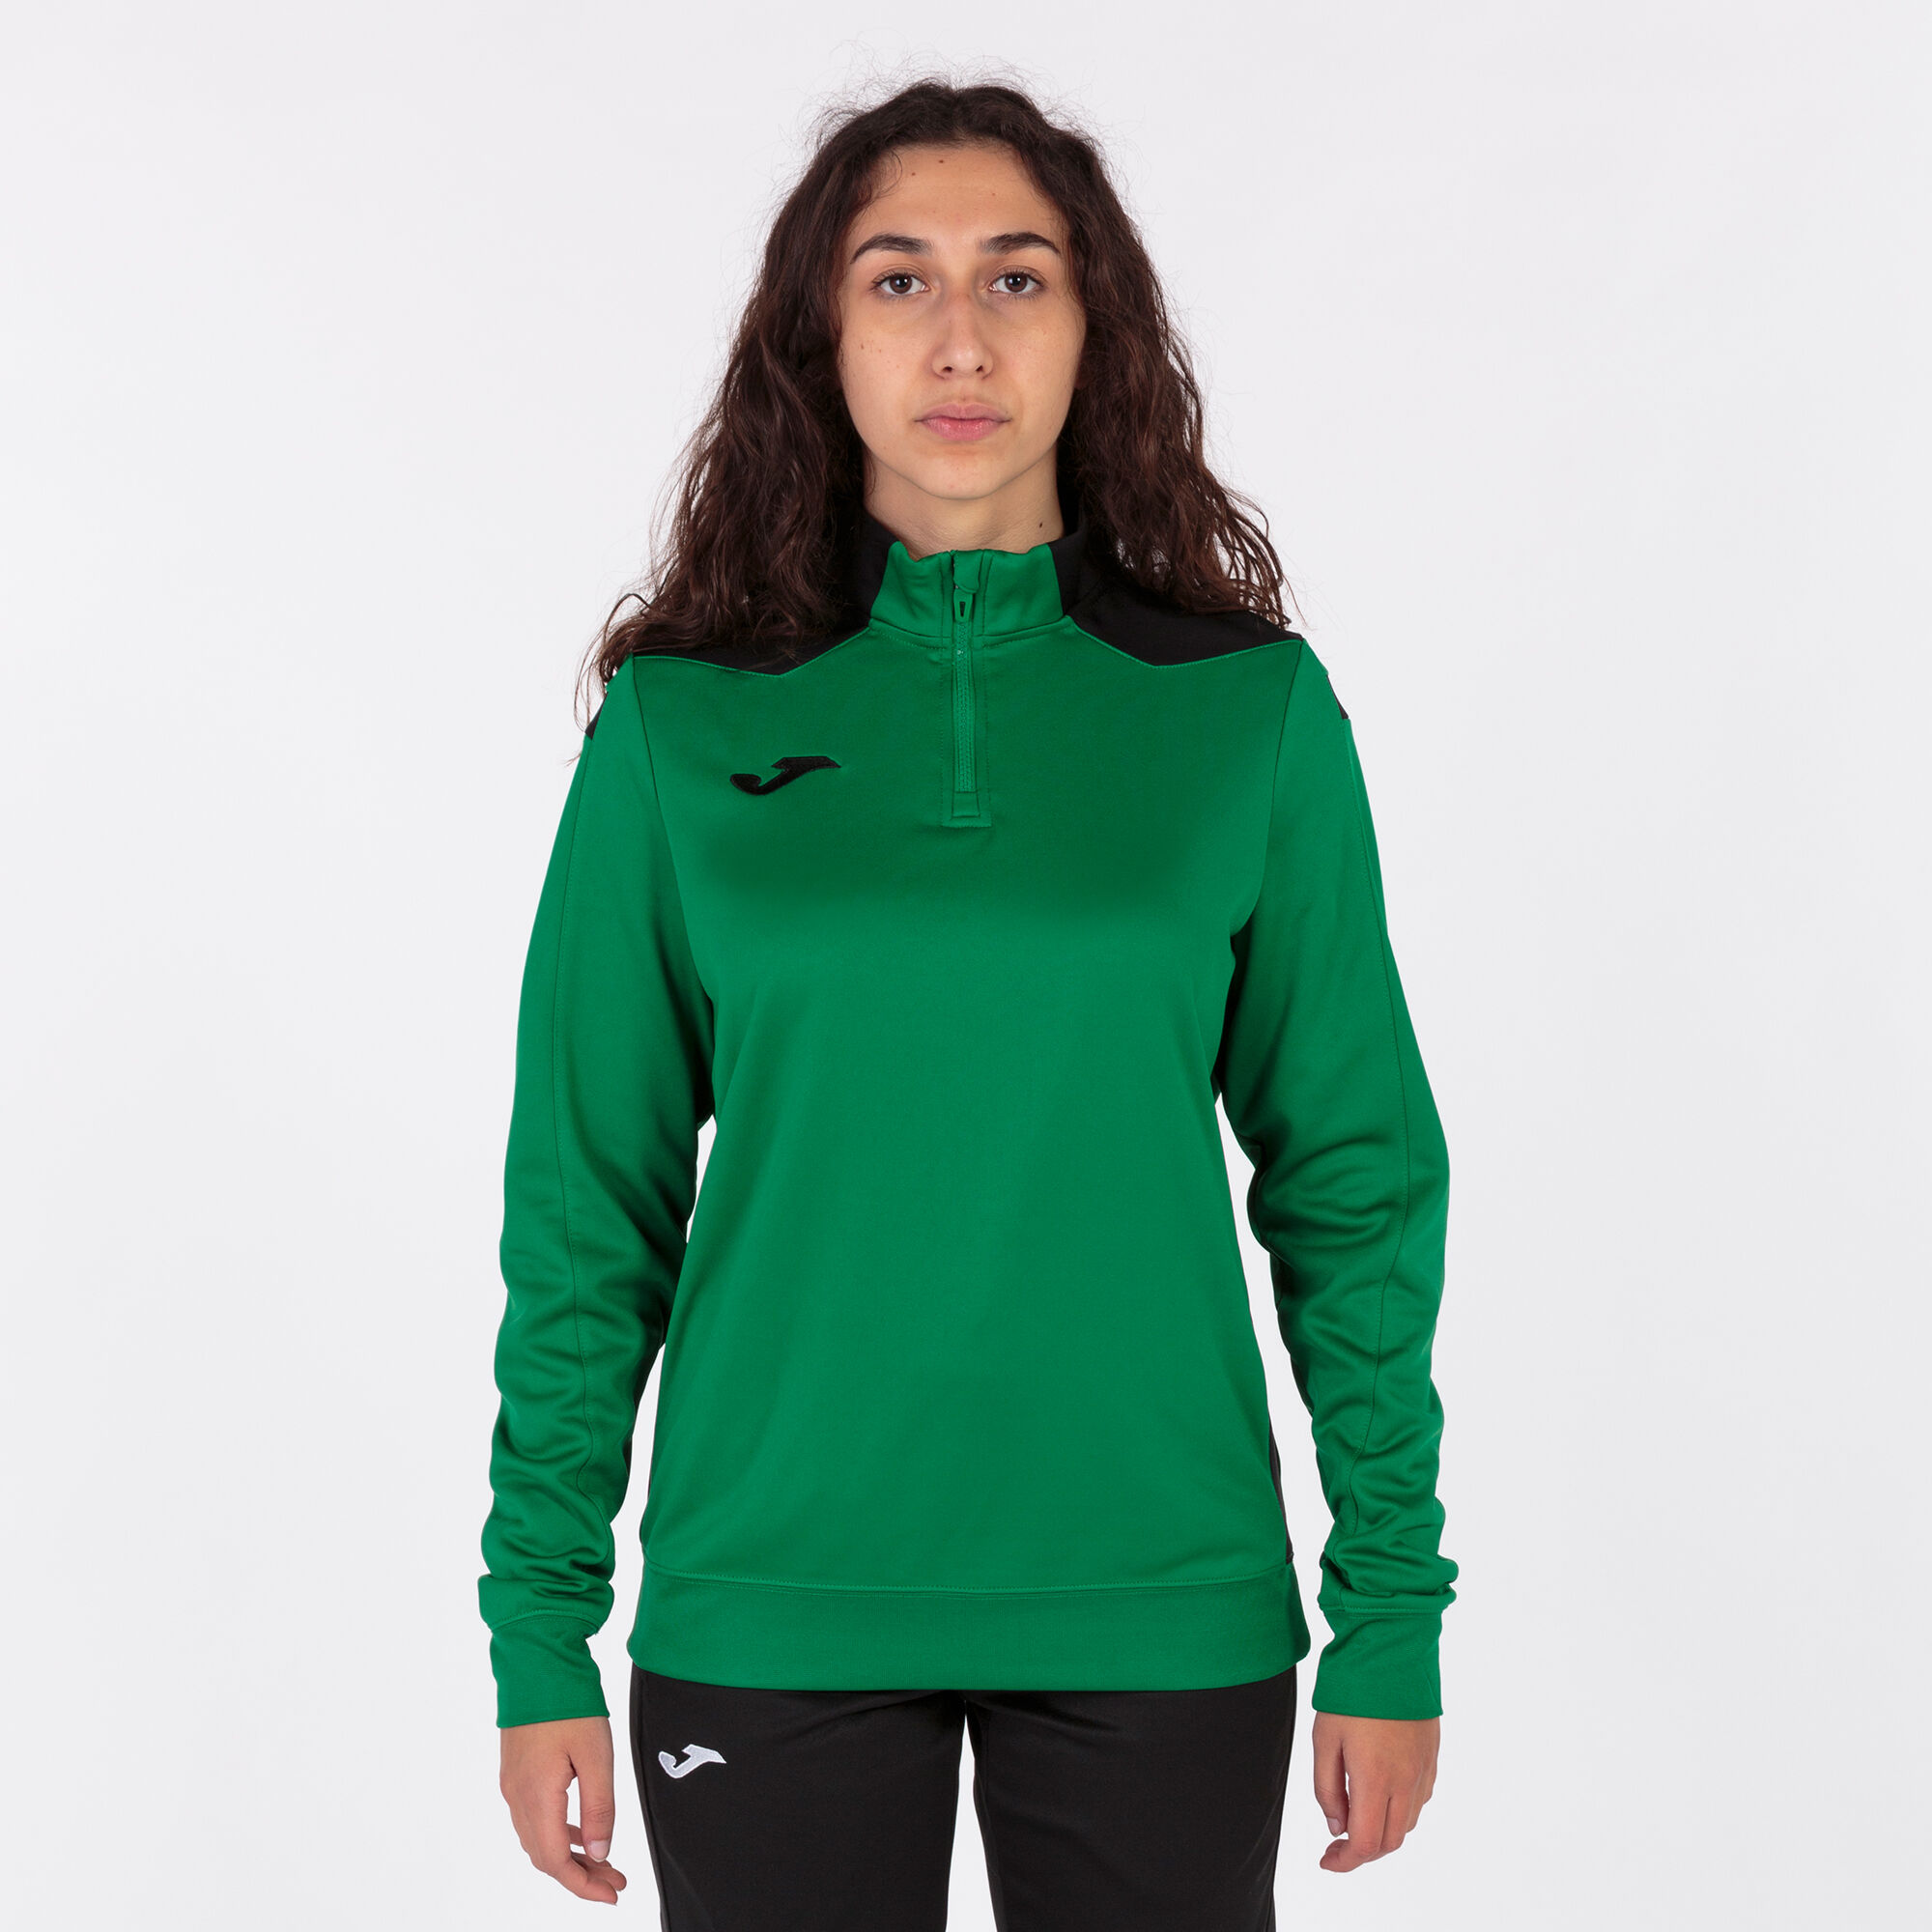 Sweatshirt frau Championship VI grün schwarz